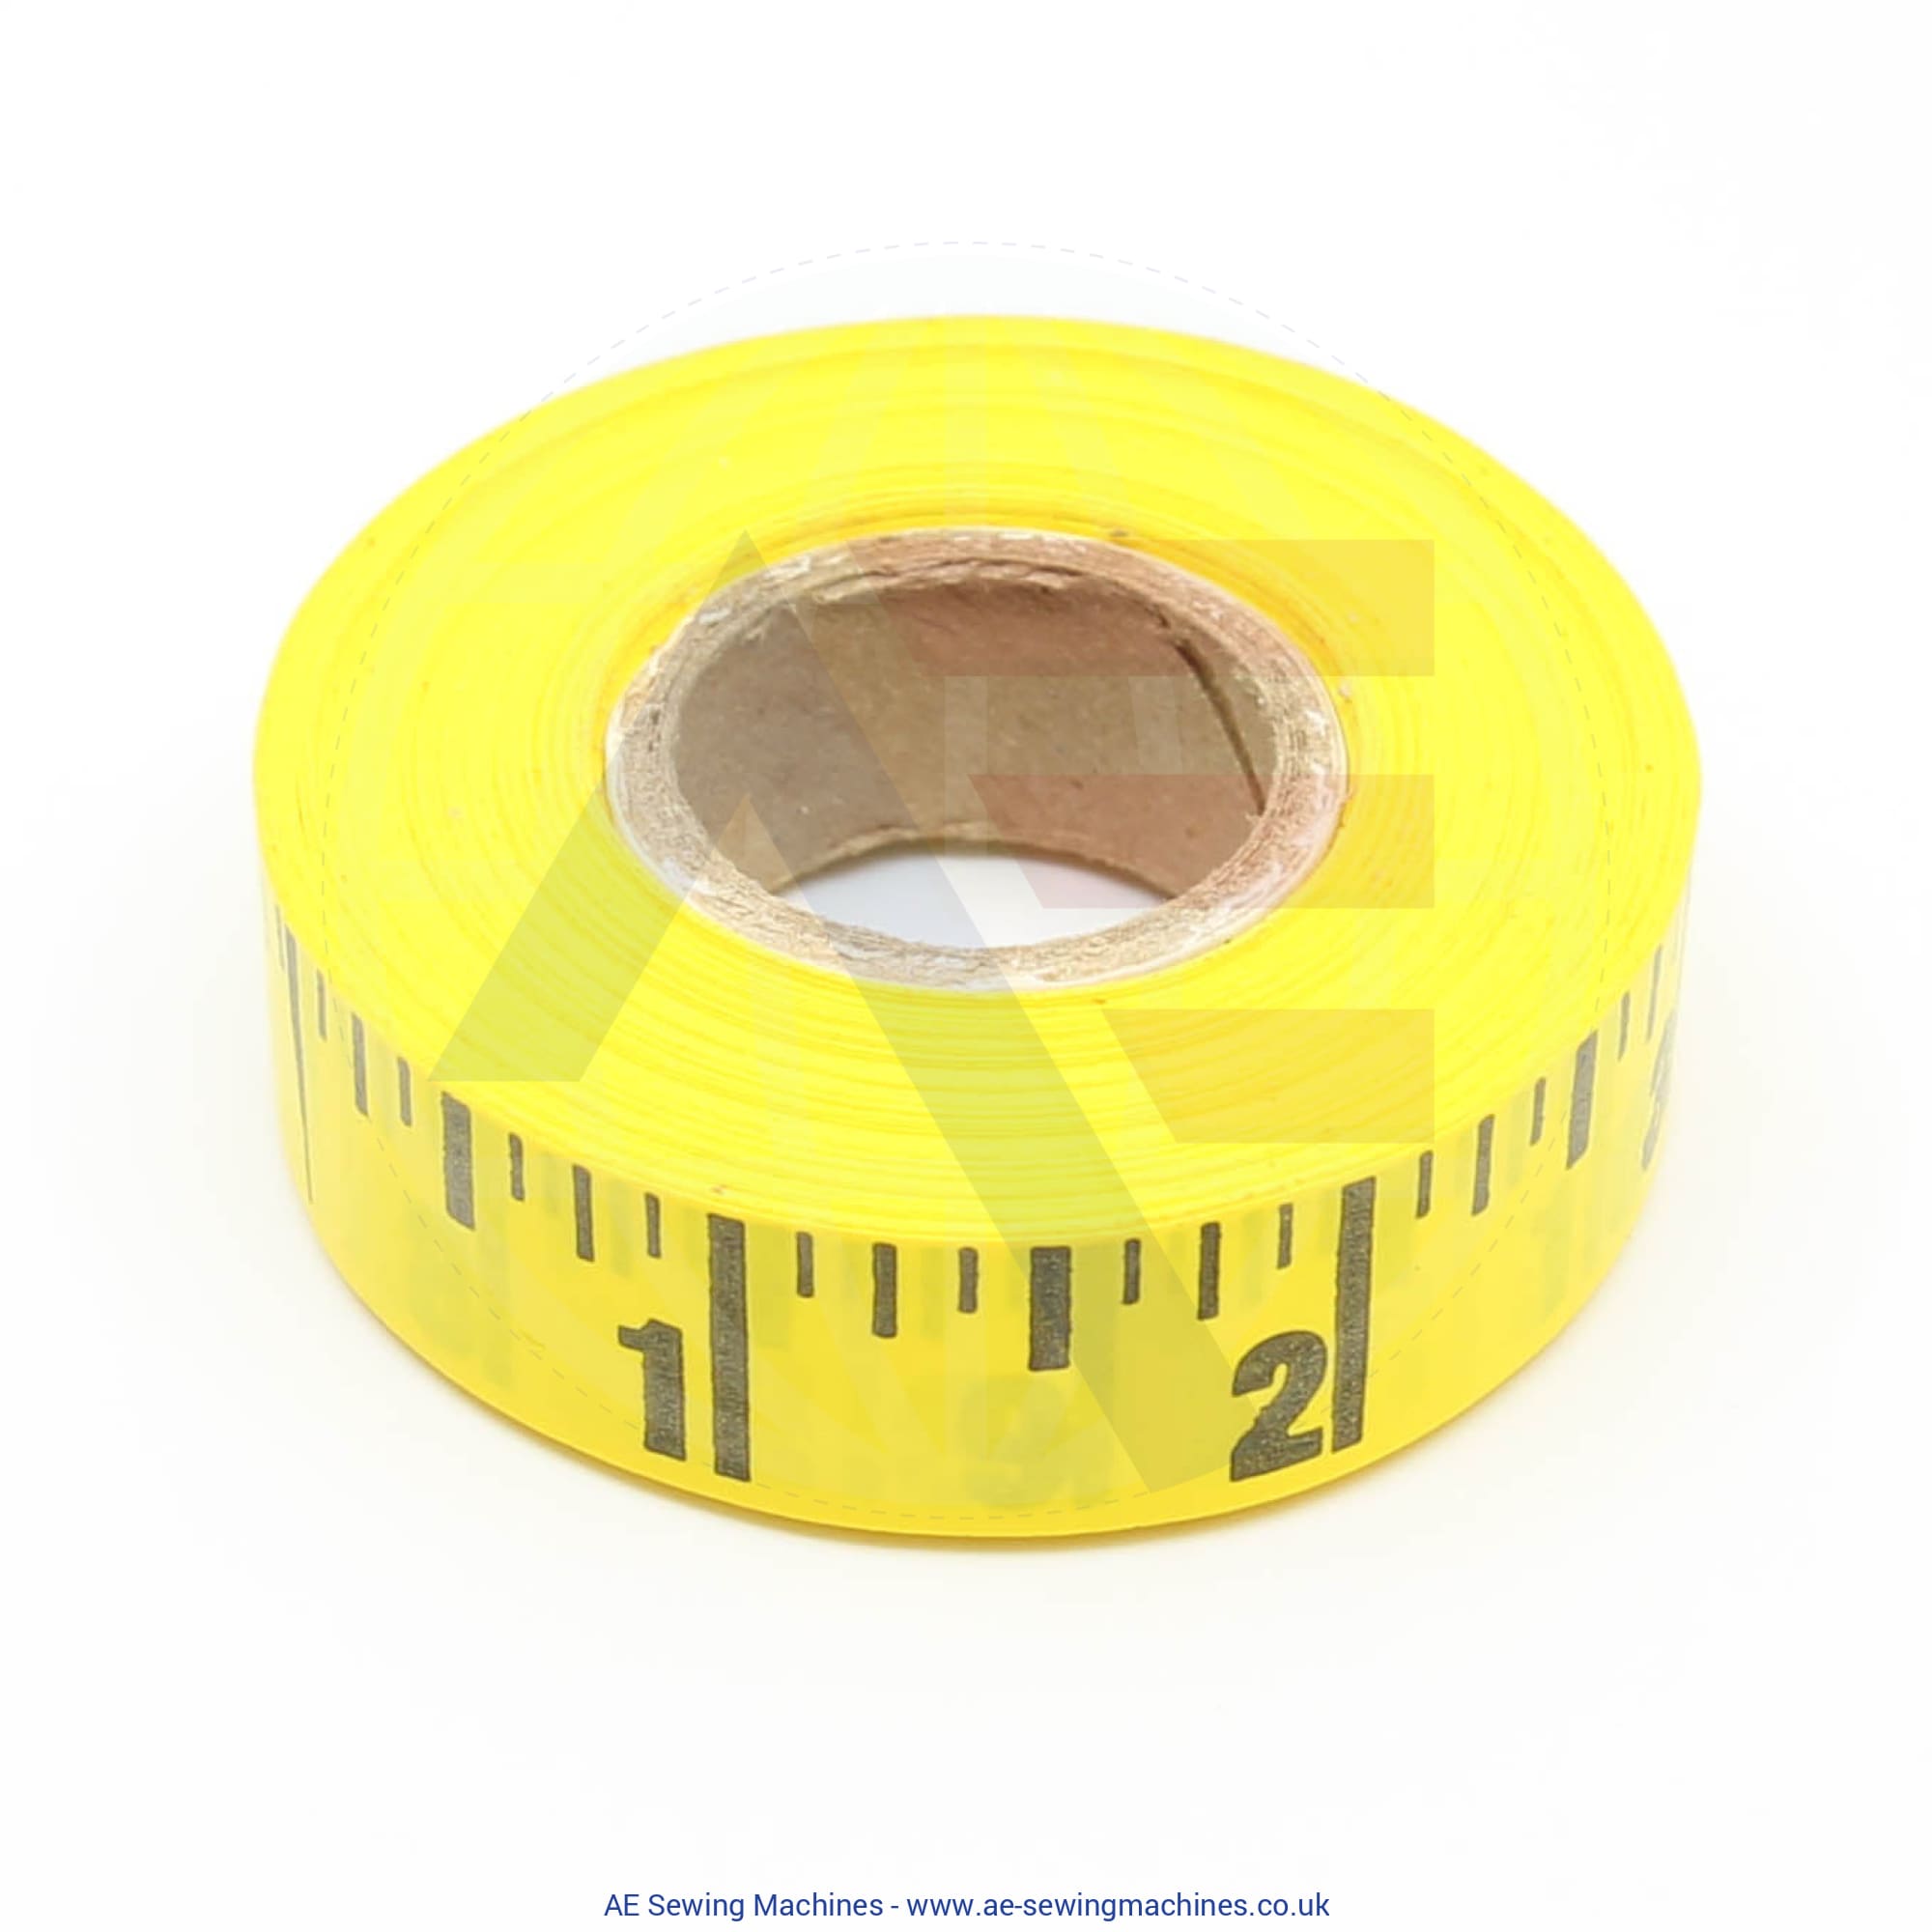 Tm21I Adhesive Backed Tape Measure Roll